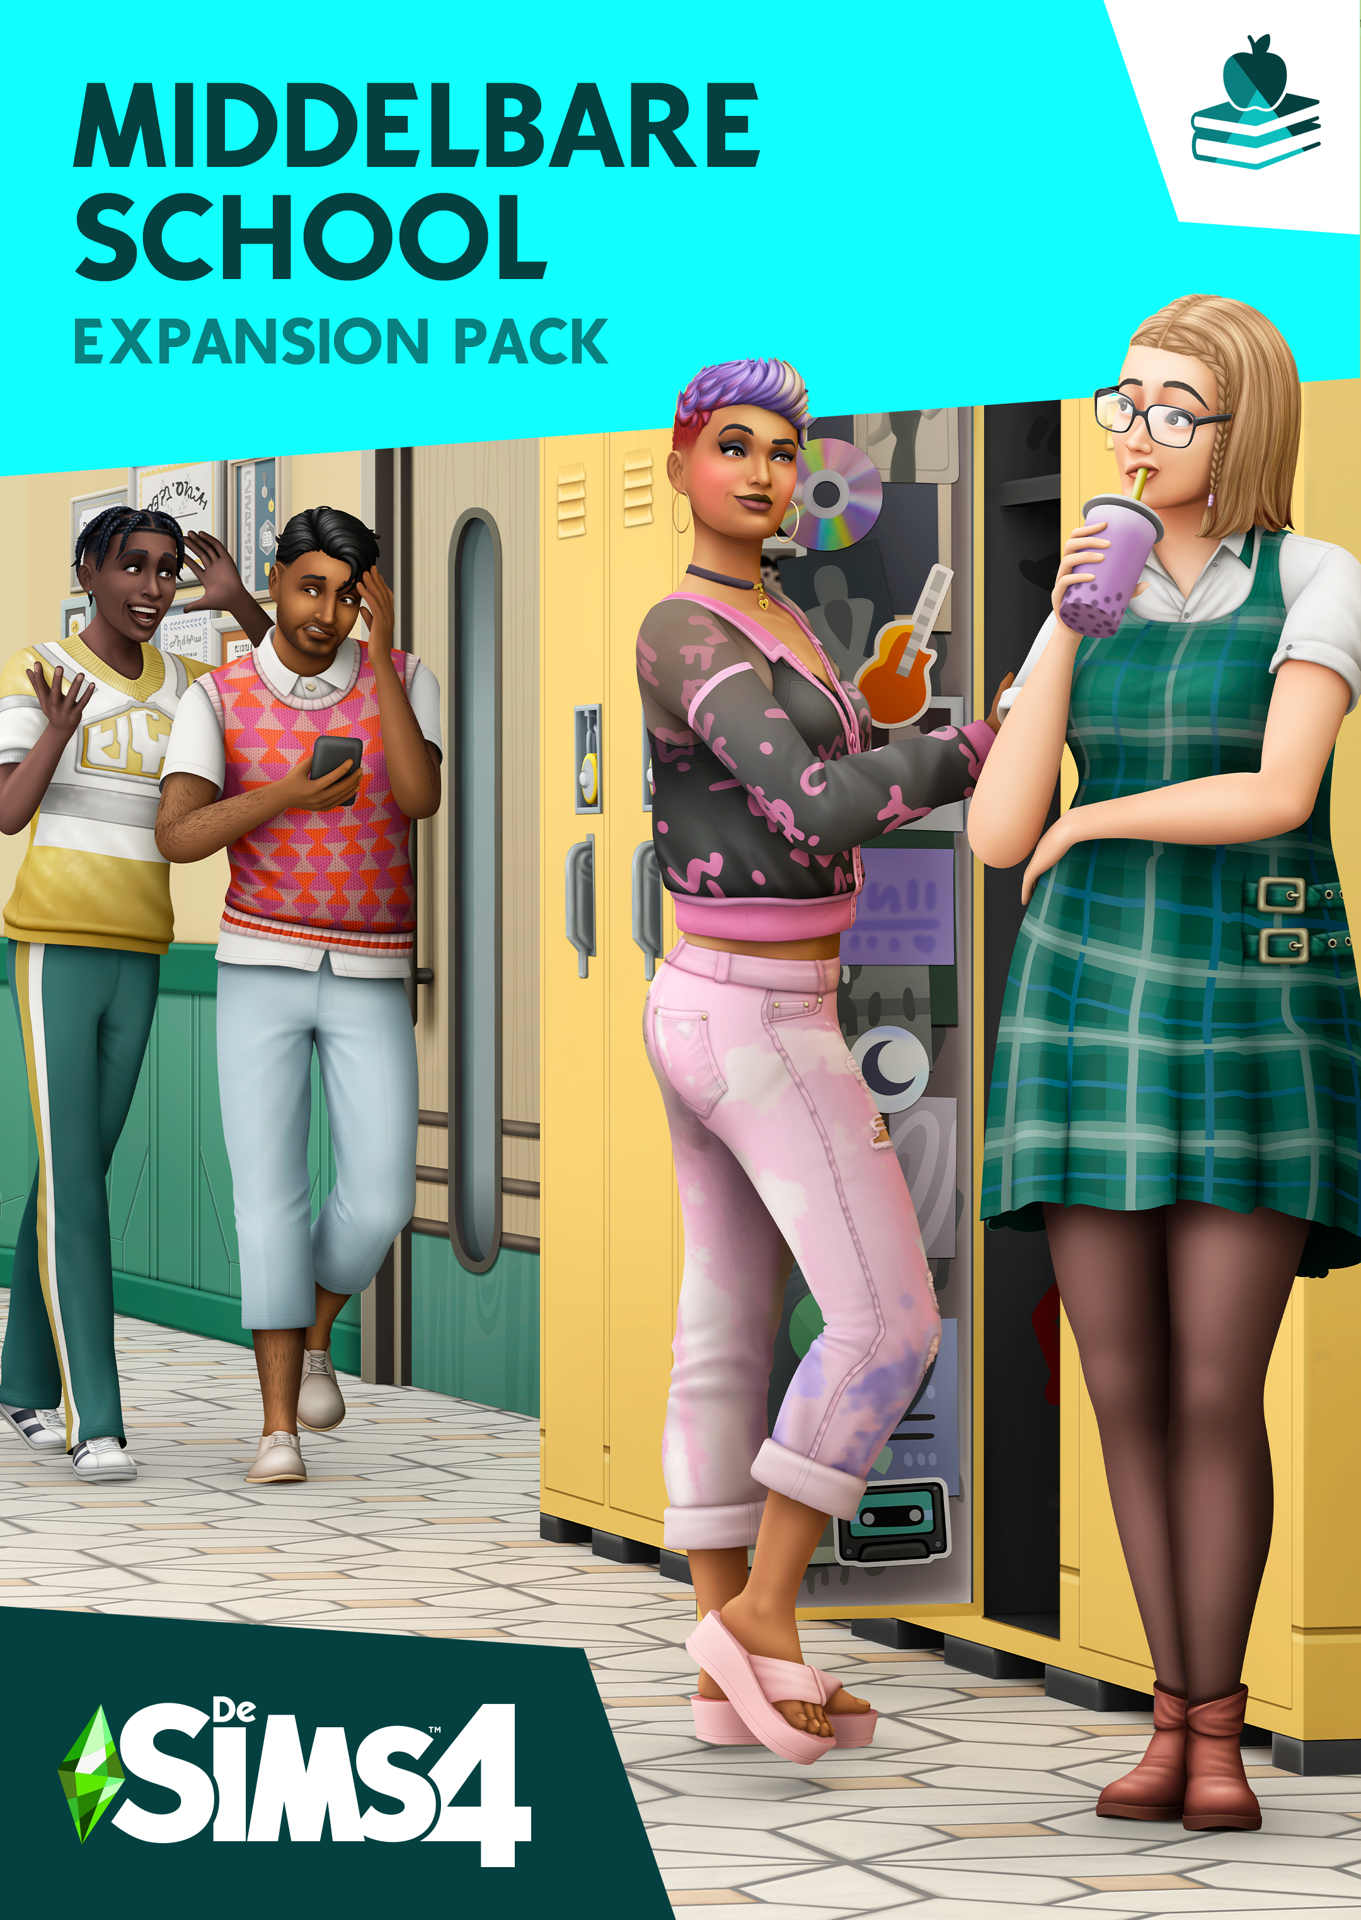 Les Sims 4 : Pack d'extension Années Lycée (Code-in-a-box)